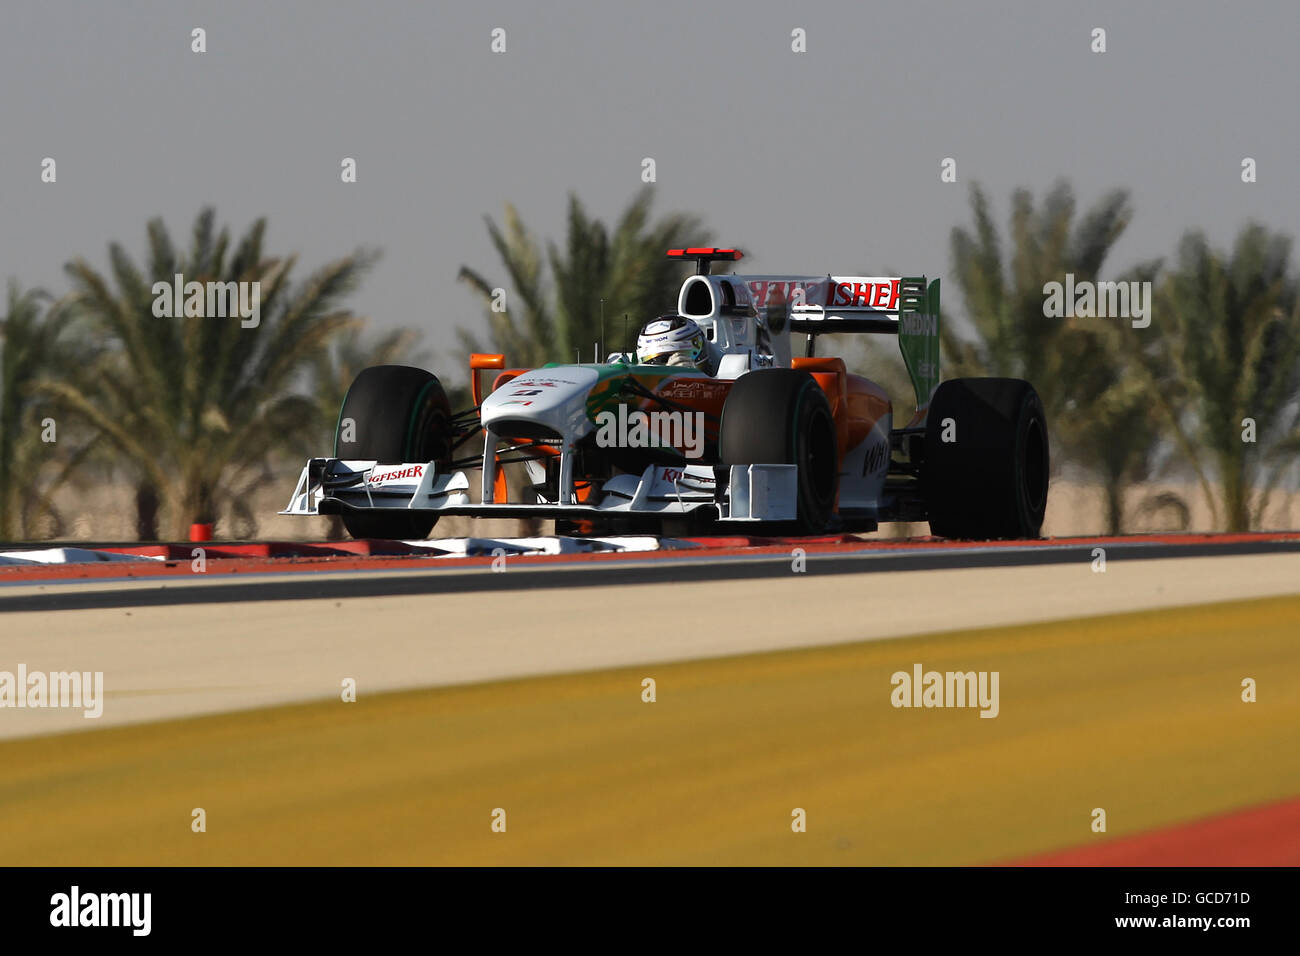 Force India's Adrian Sutil during the Gulf Air Bahrain Grand Prix at the Bahrain International Circuit in Sakhir, Bahrain Stock Photo